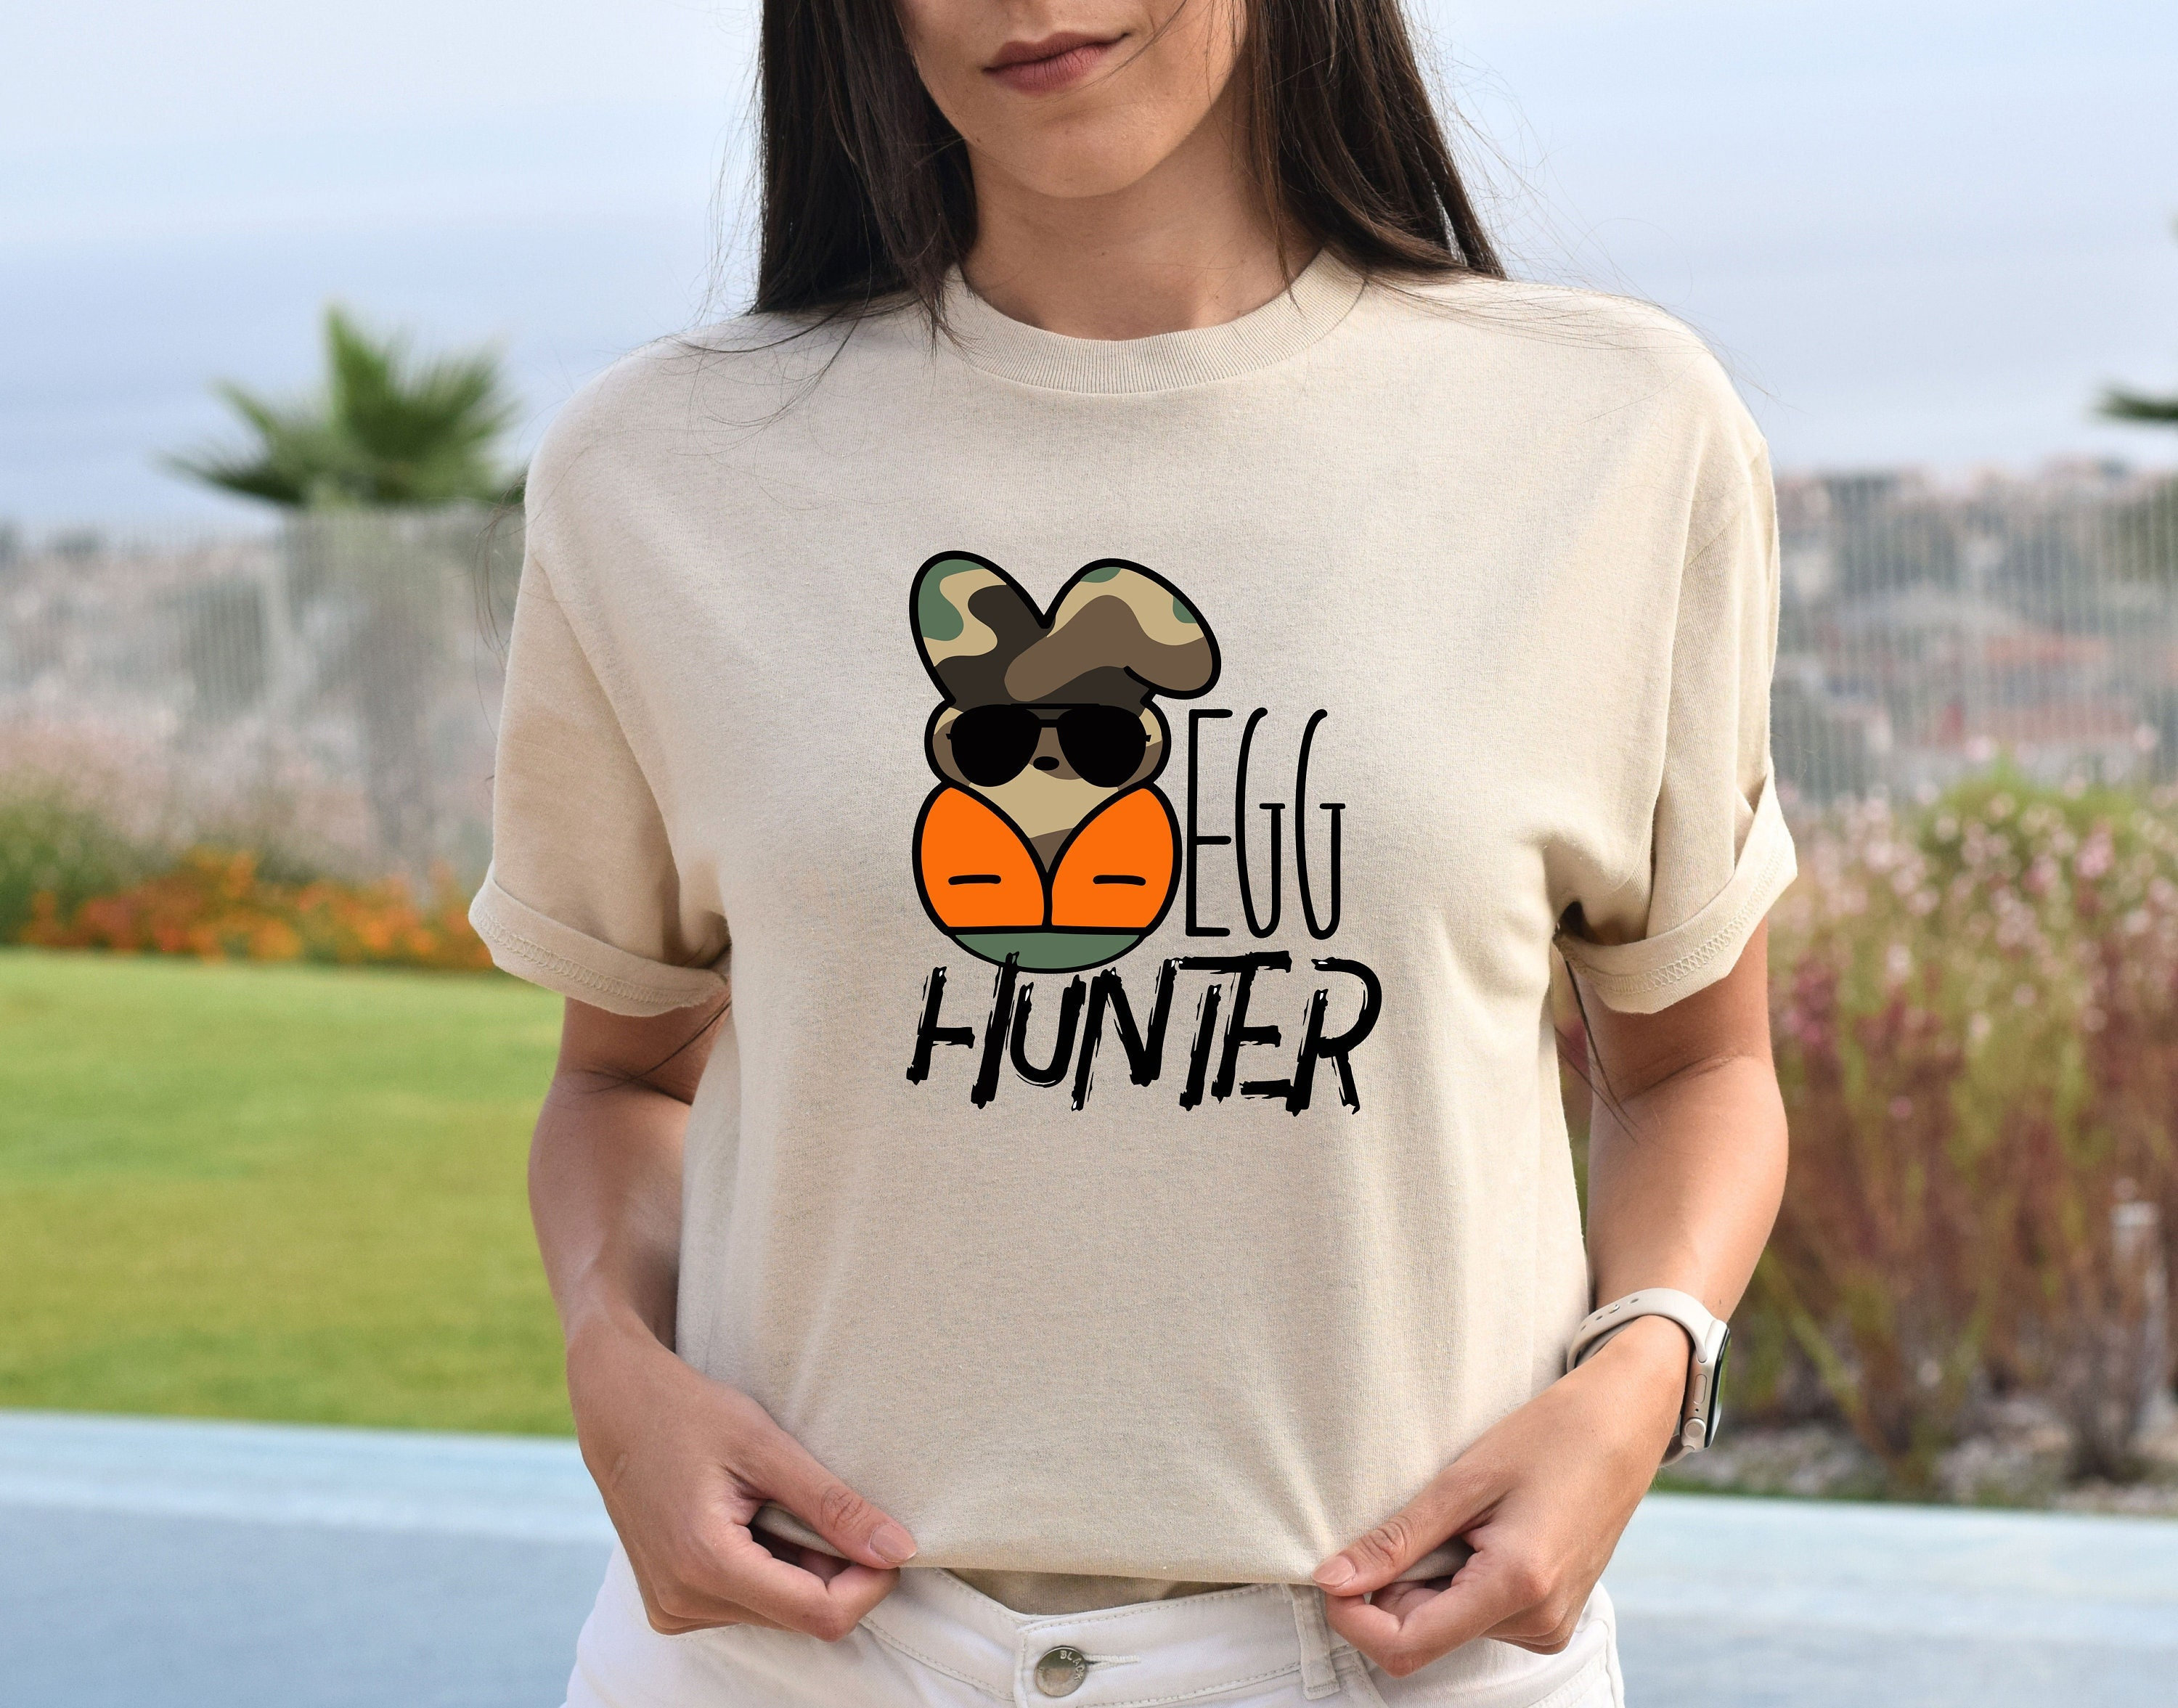 egg hunter easter bunny shirt women easter day shirt kids easter outfit 8829